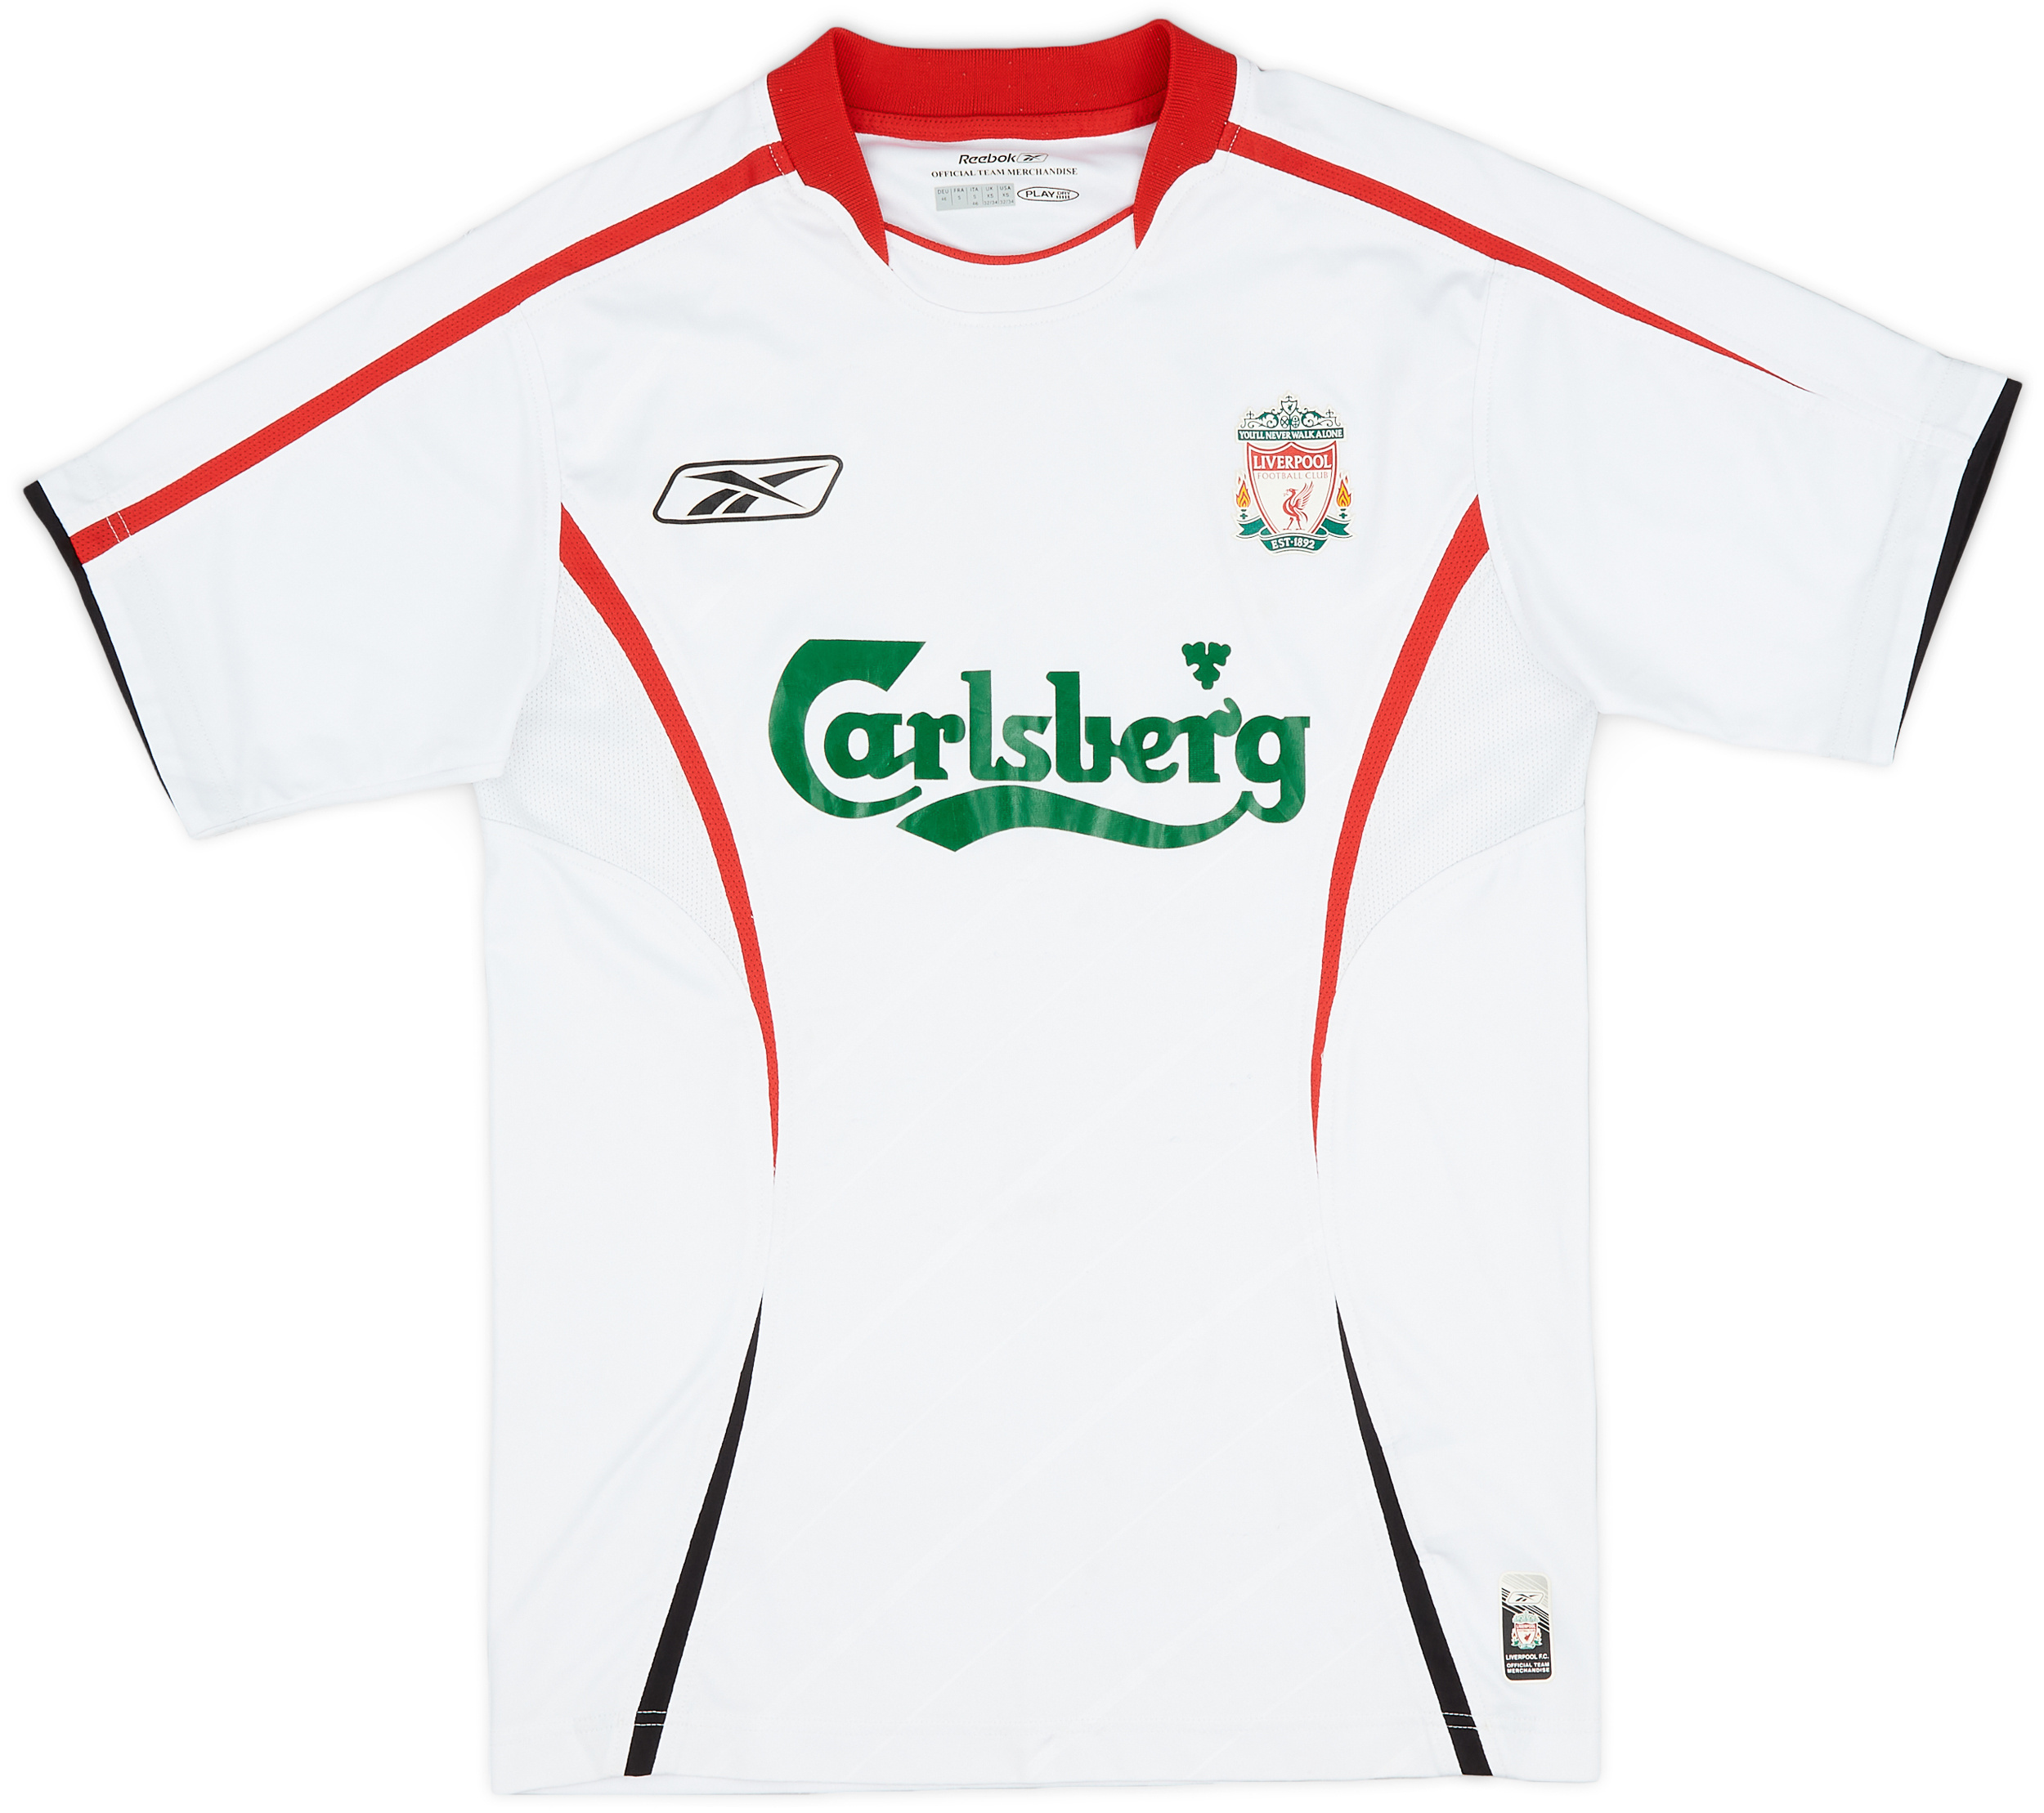 2005-06 Liverpool Away Shirt - 6/10 - ()